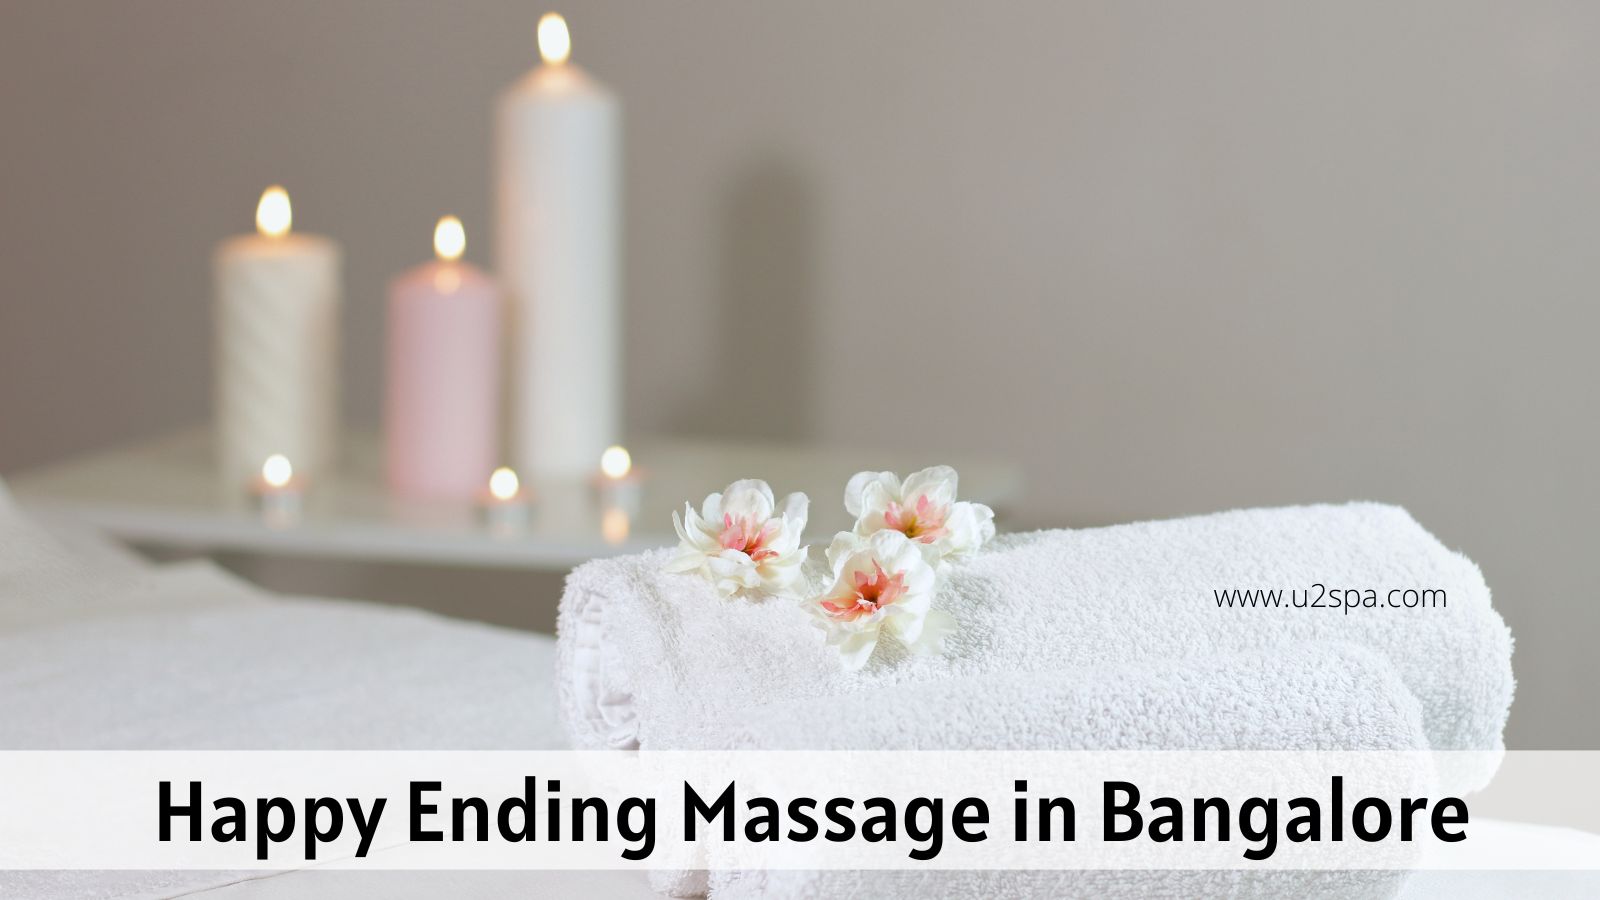 Happy Ending Massage in Bangalore